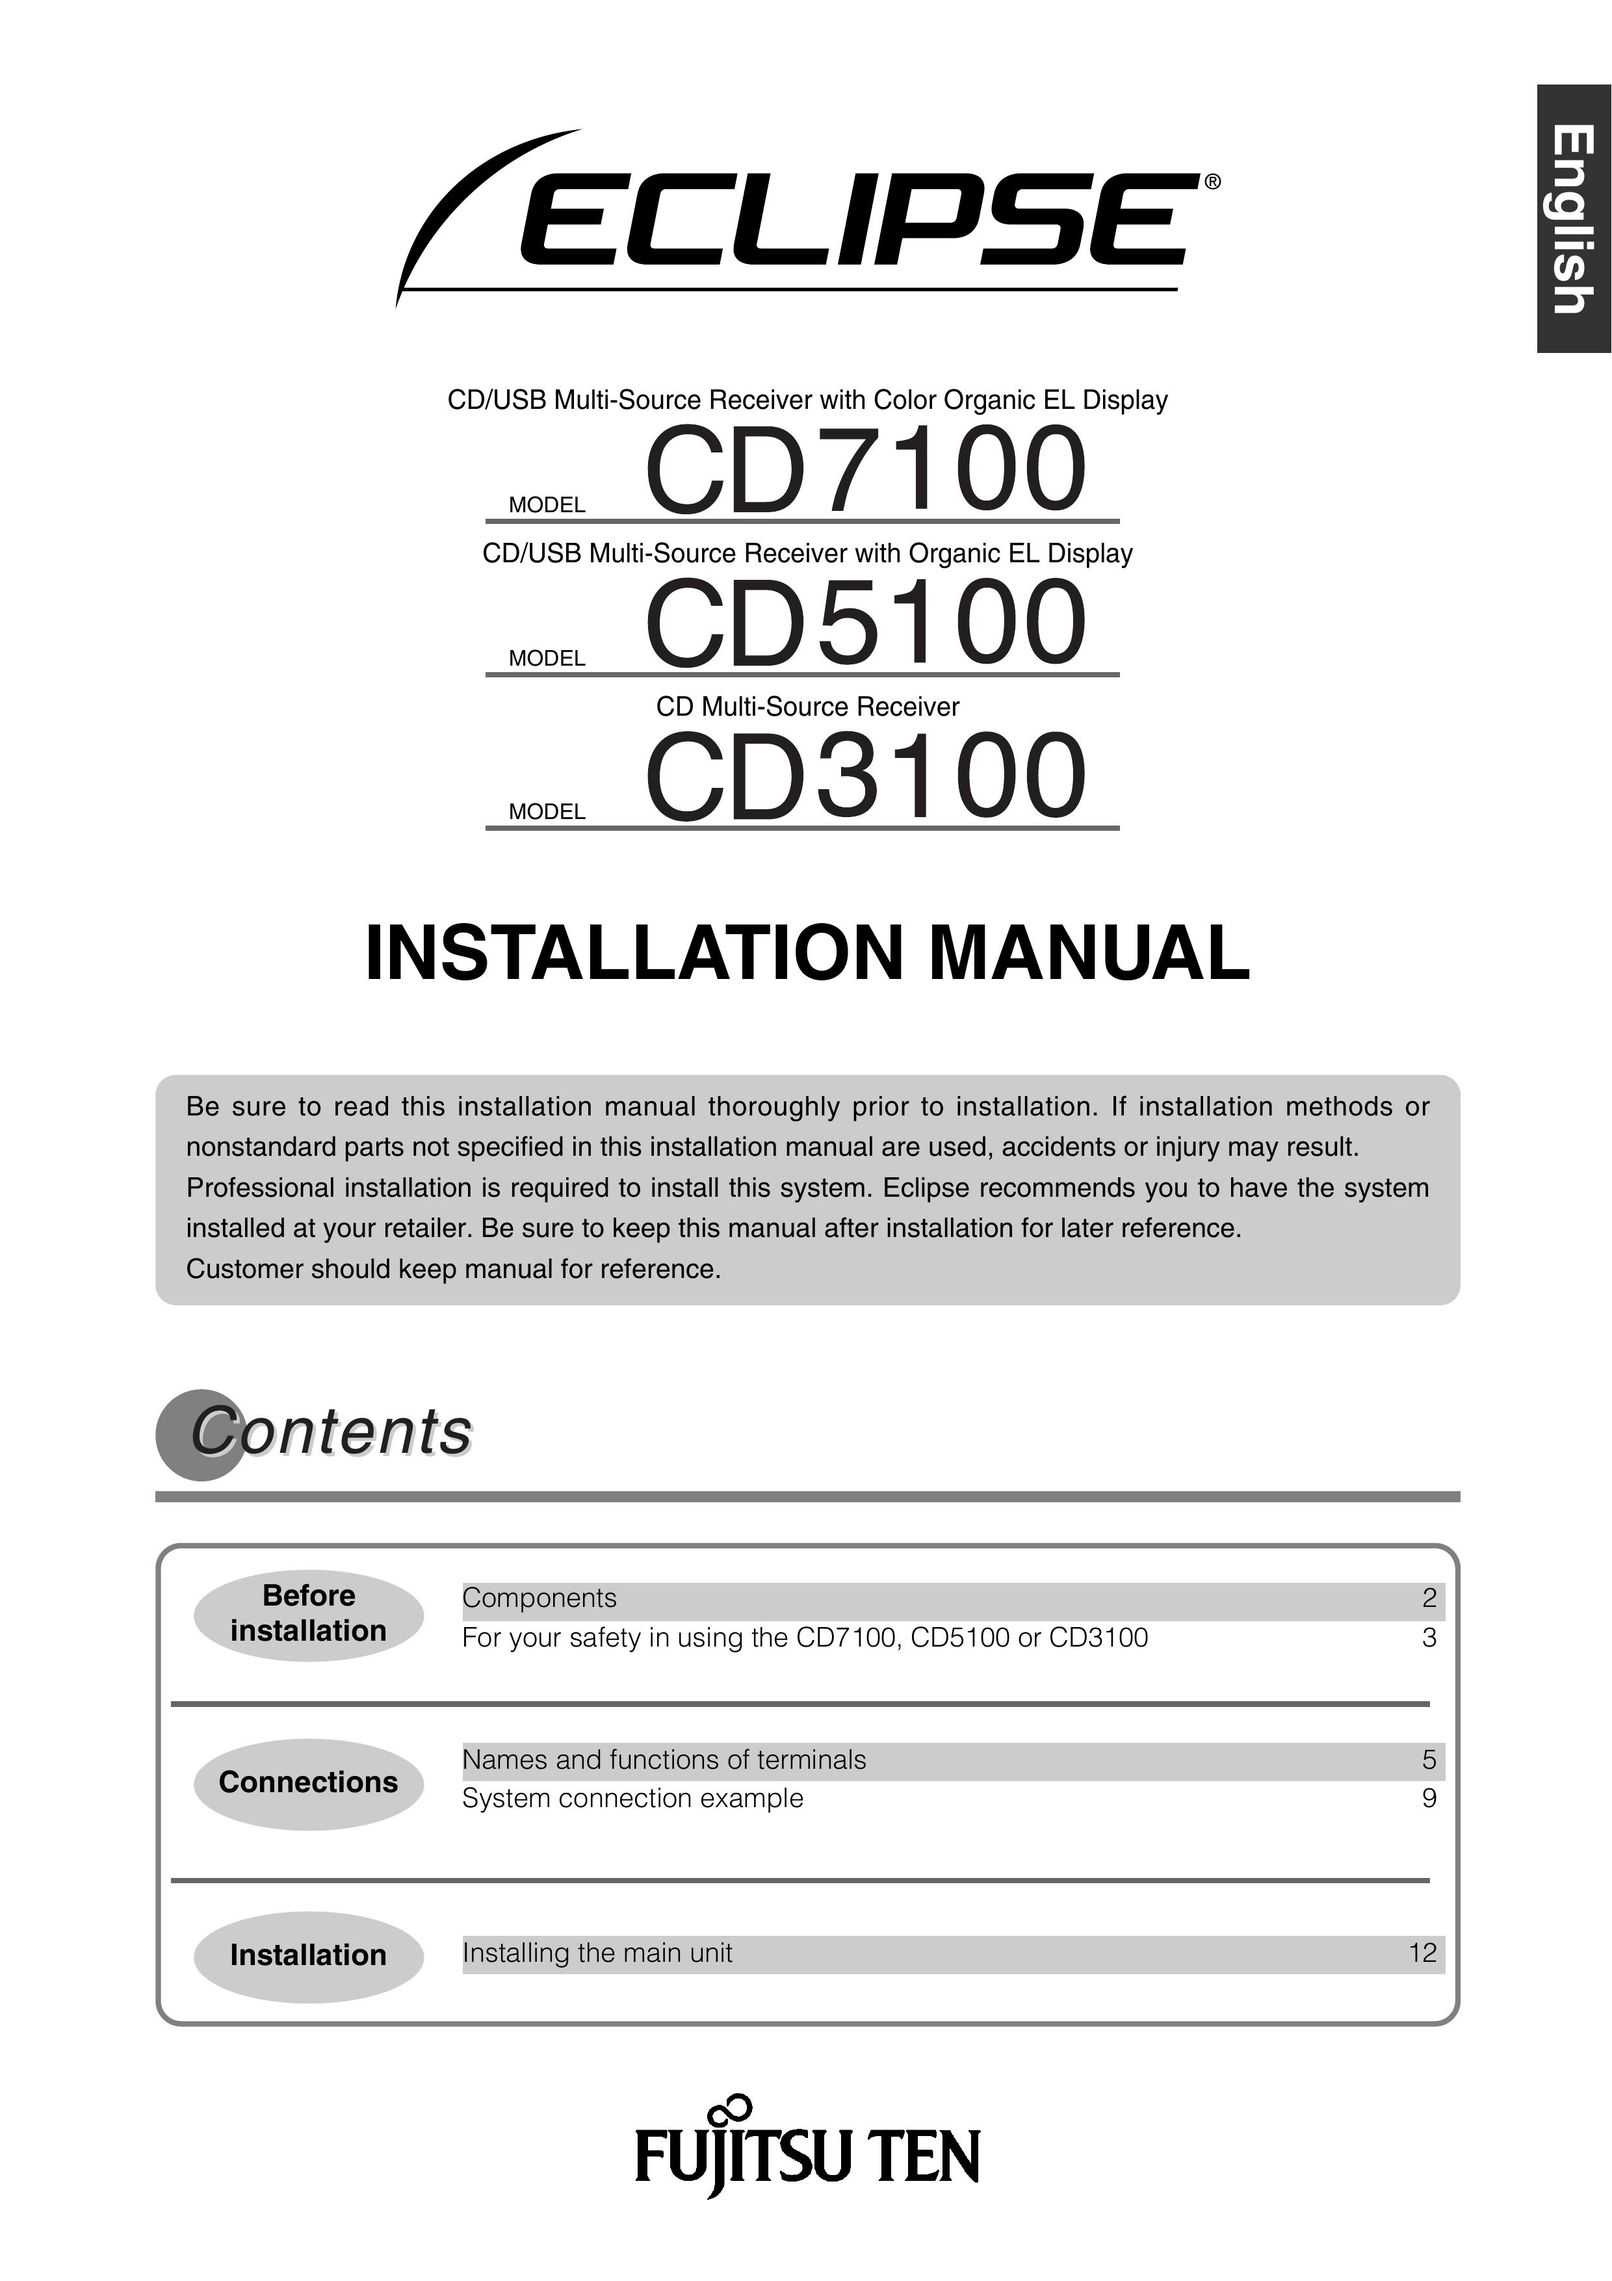 Eclipse - Fujitsu Ten CD7100 Car Stereo System User Manual